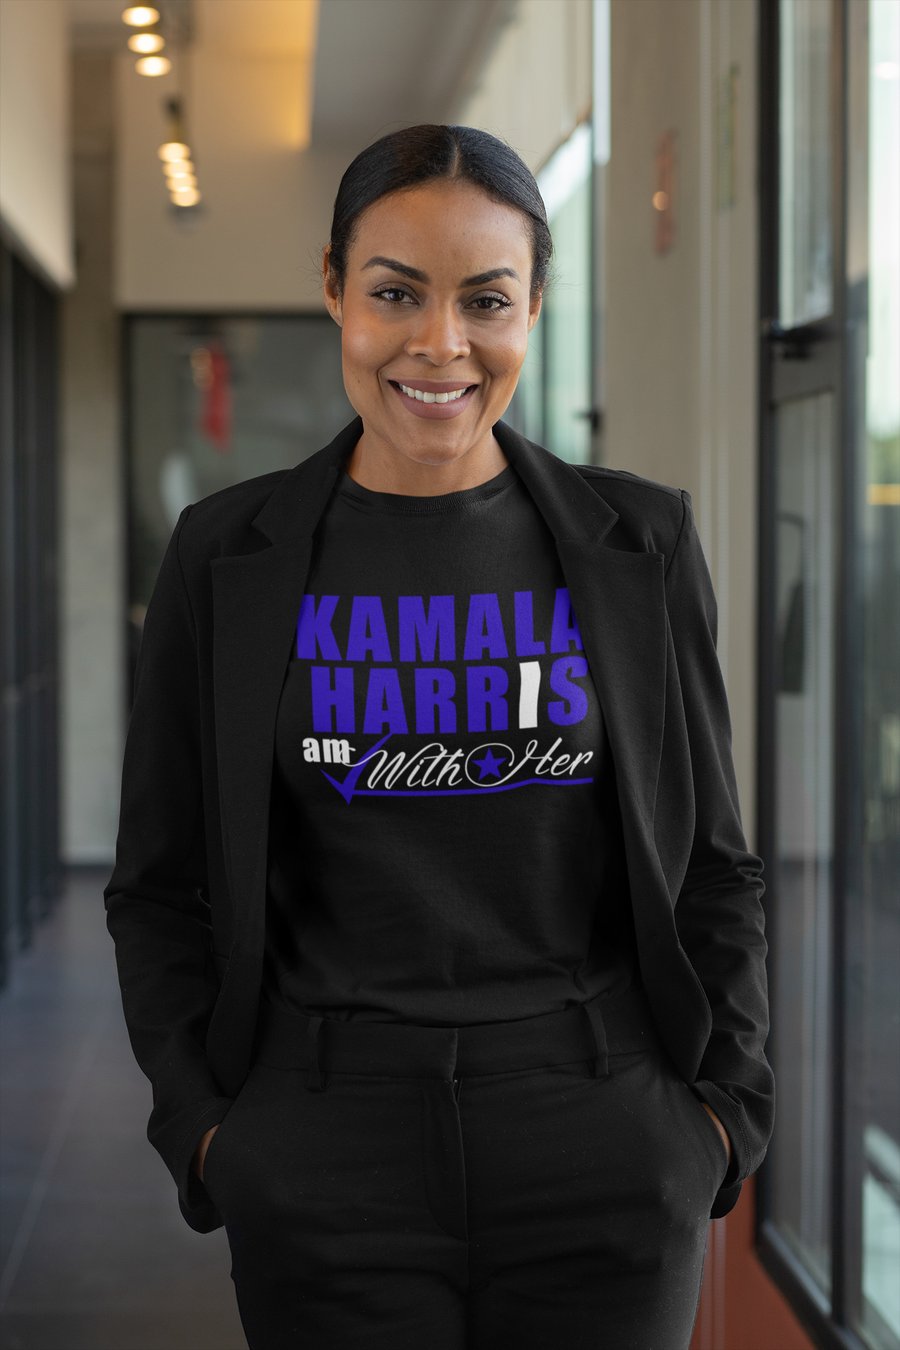 Image of Kamala Harris "I AM WITH HER" Blue